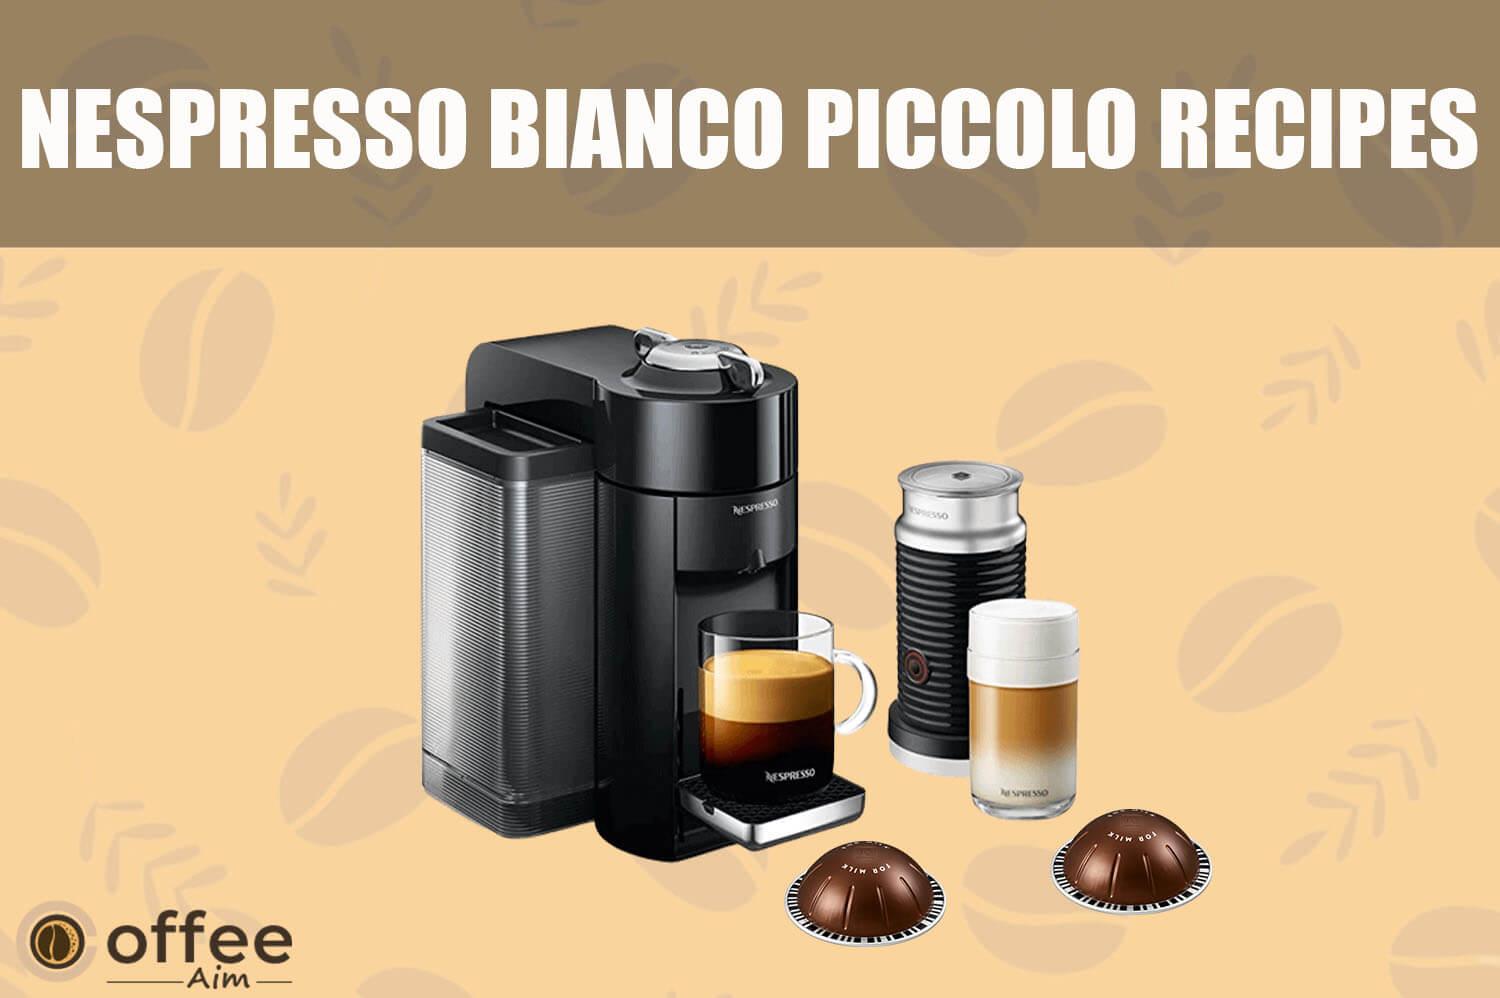 Featured image for the article "Nespresso Bianco Piccolo Recipes"